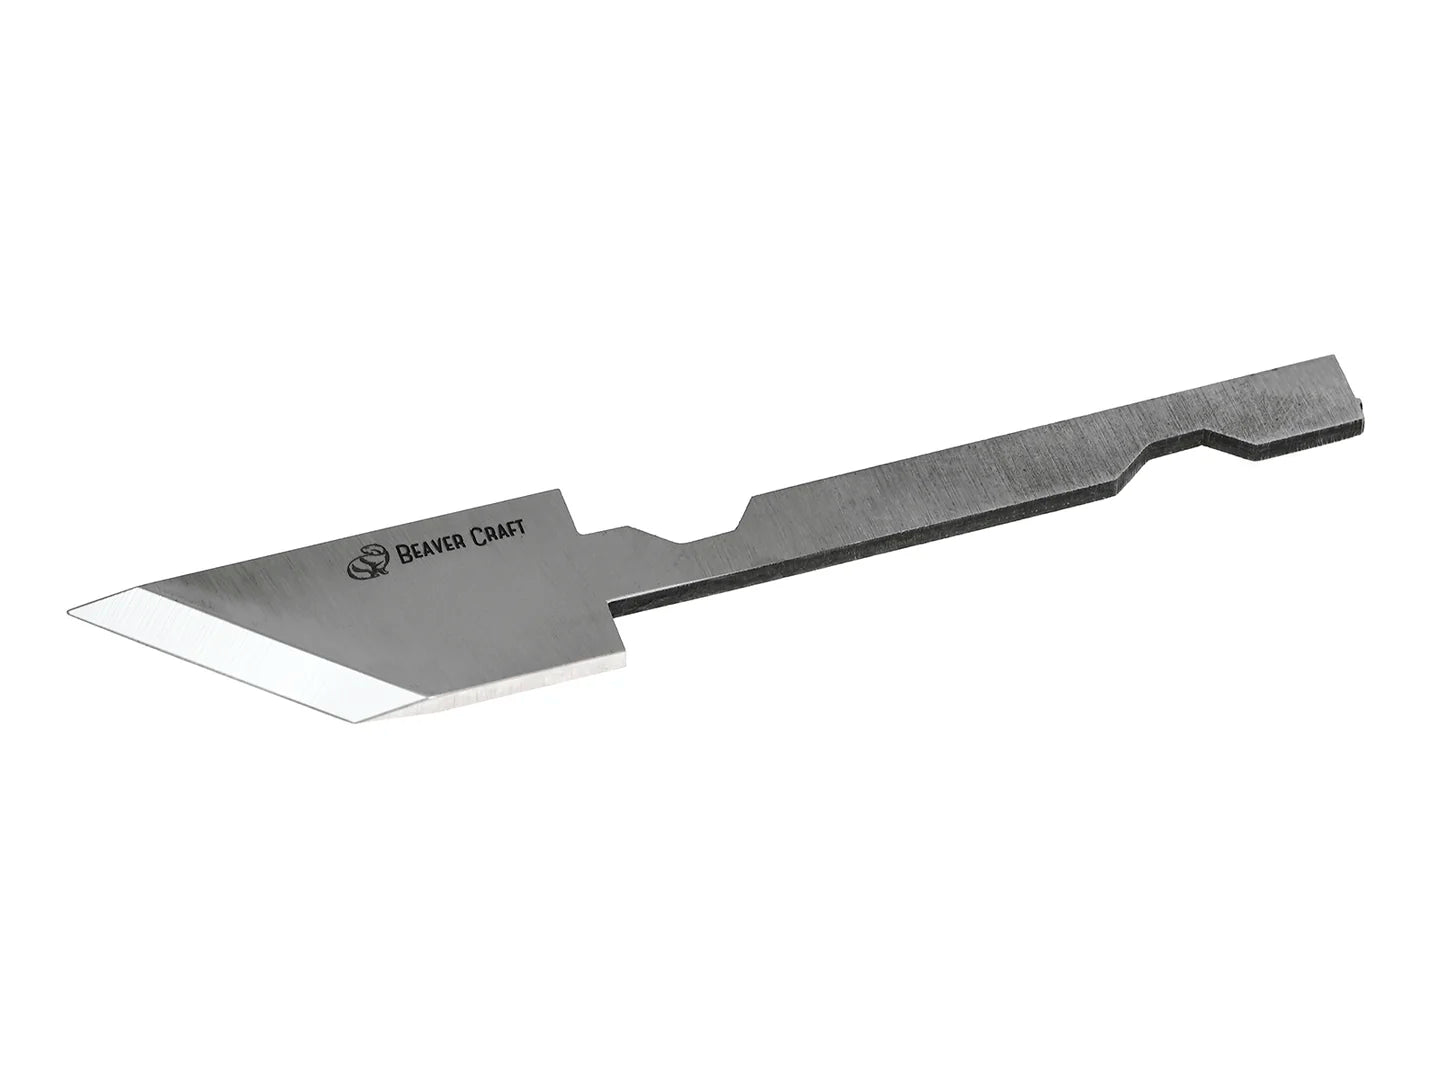 Marking knife blade